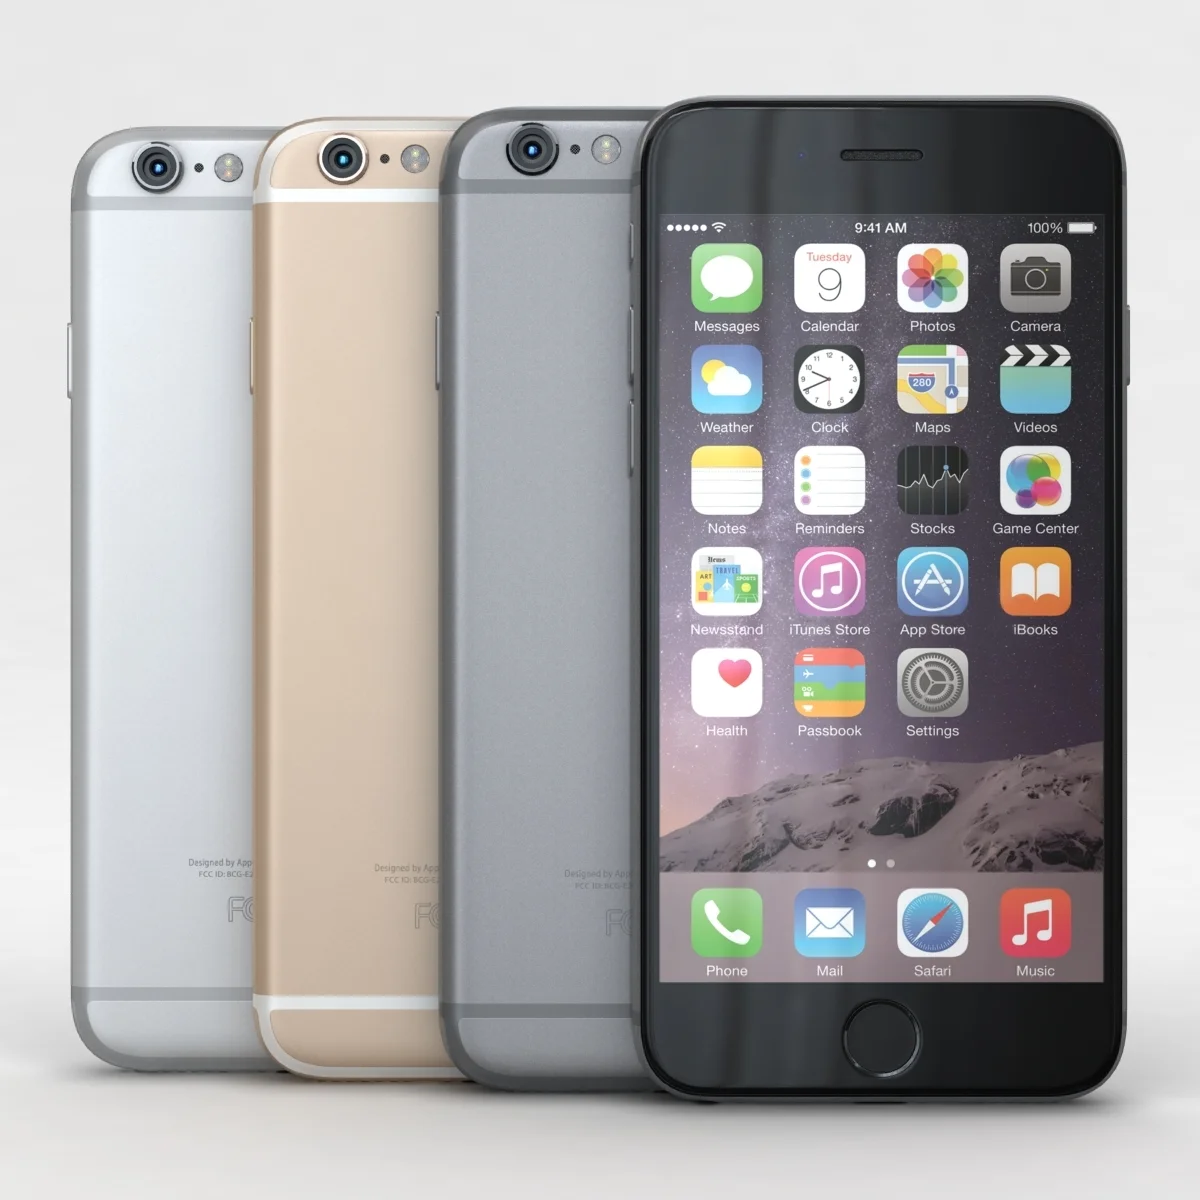 6 плюс 64. Iphone 6 Plus 64gb. Iphone 6 Plus 16gb. Apple iphone 6 Plus 64gb серый. Серый космос Apple iphone 6s Plus.